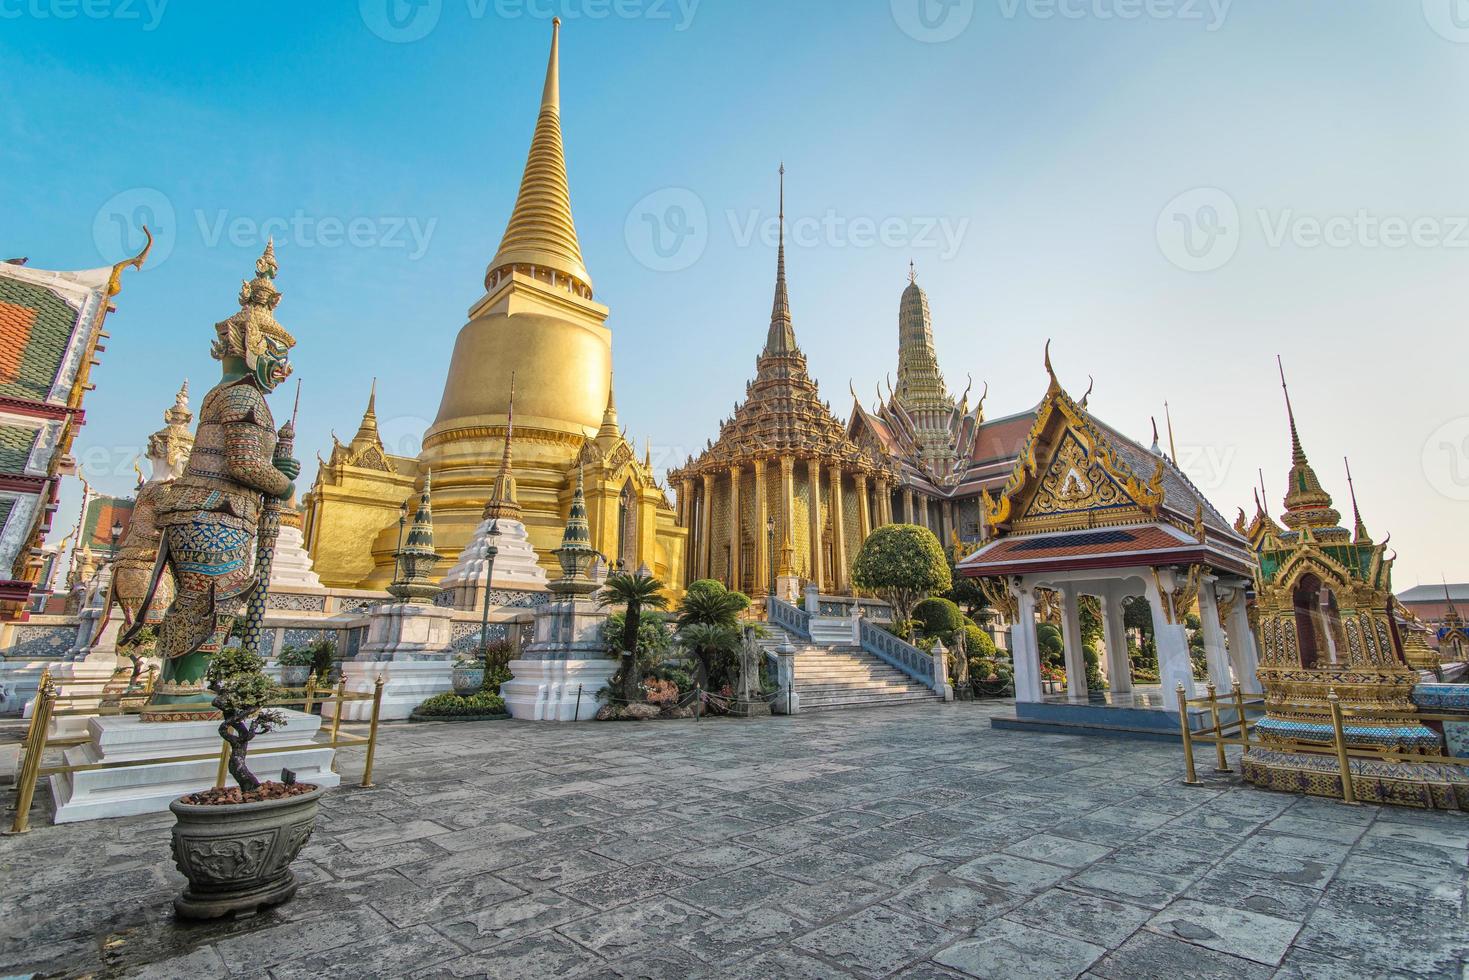 en Phra Kaeo, templo del Buda Esmeralda, Bangkok, Tailandia. foto